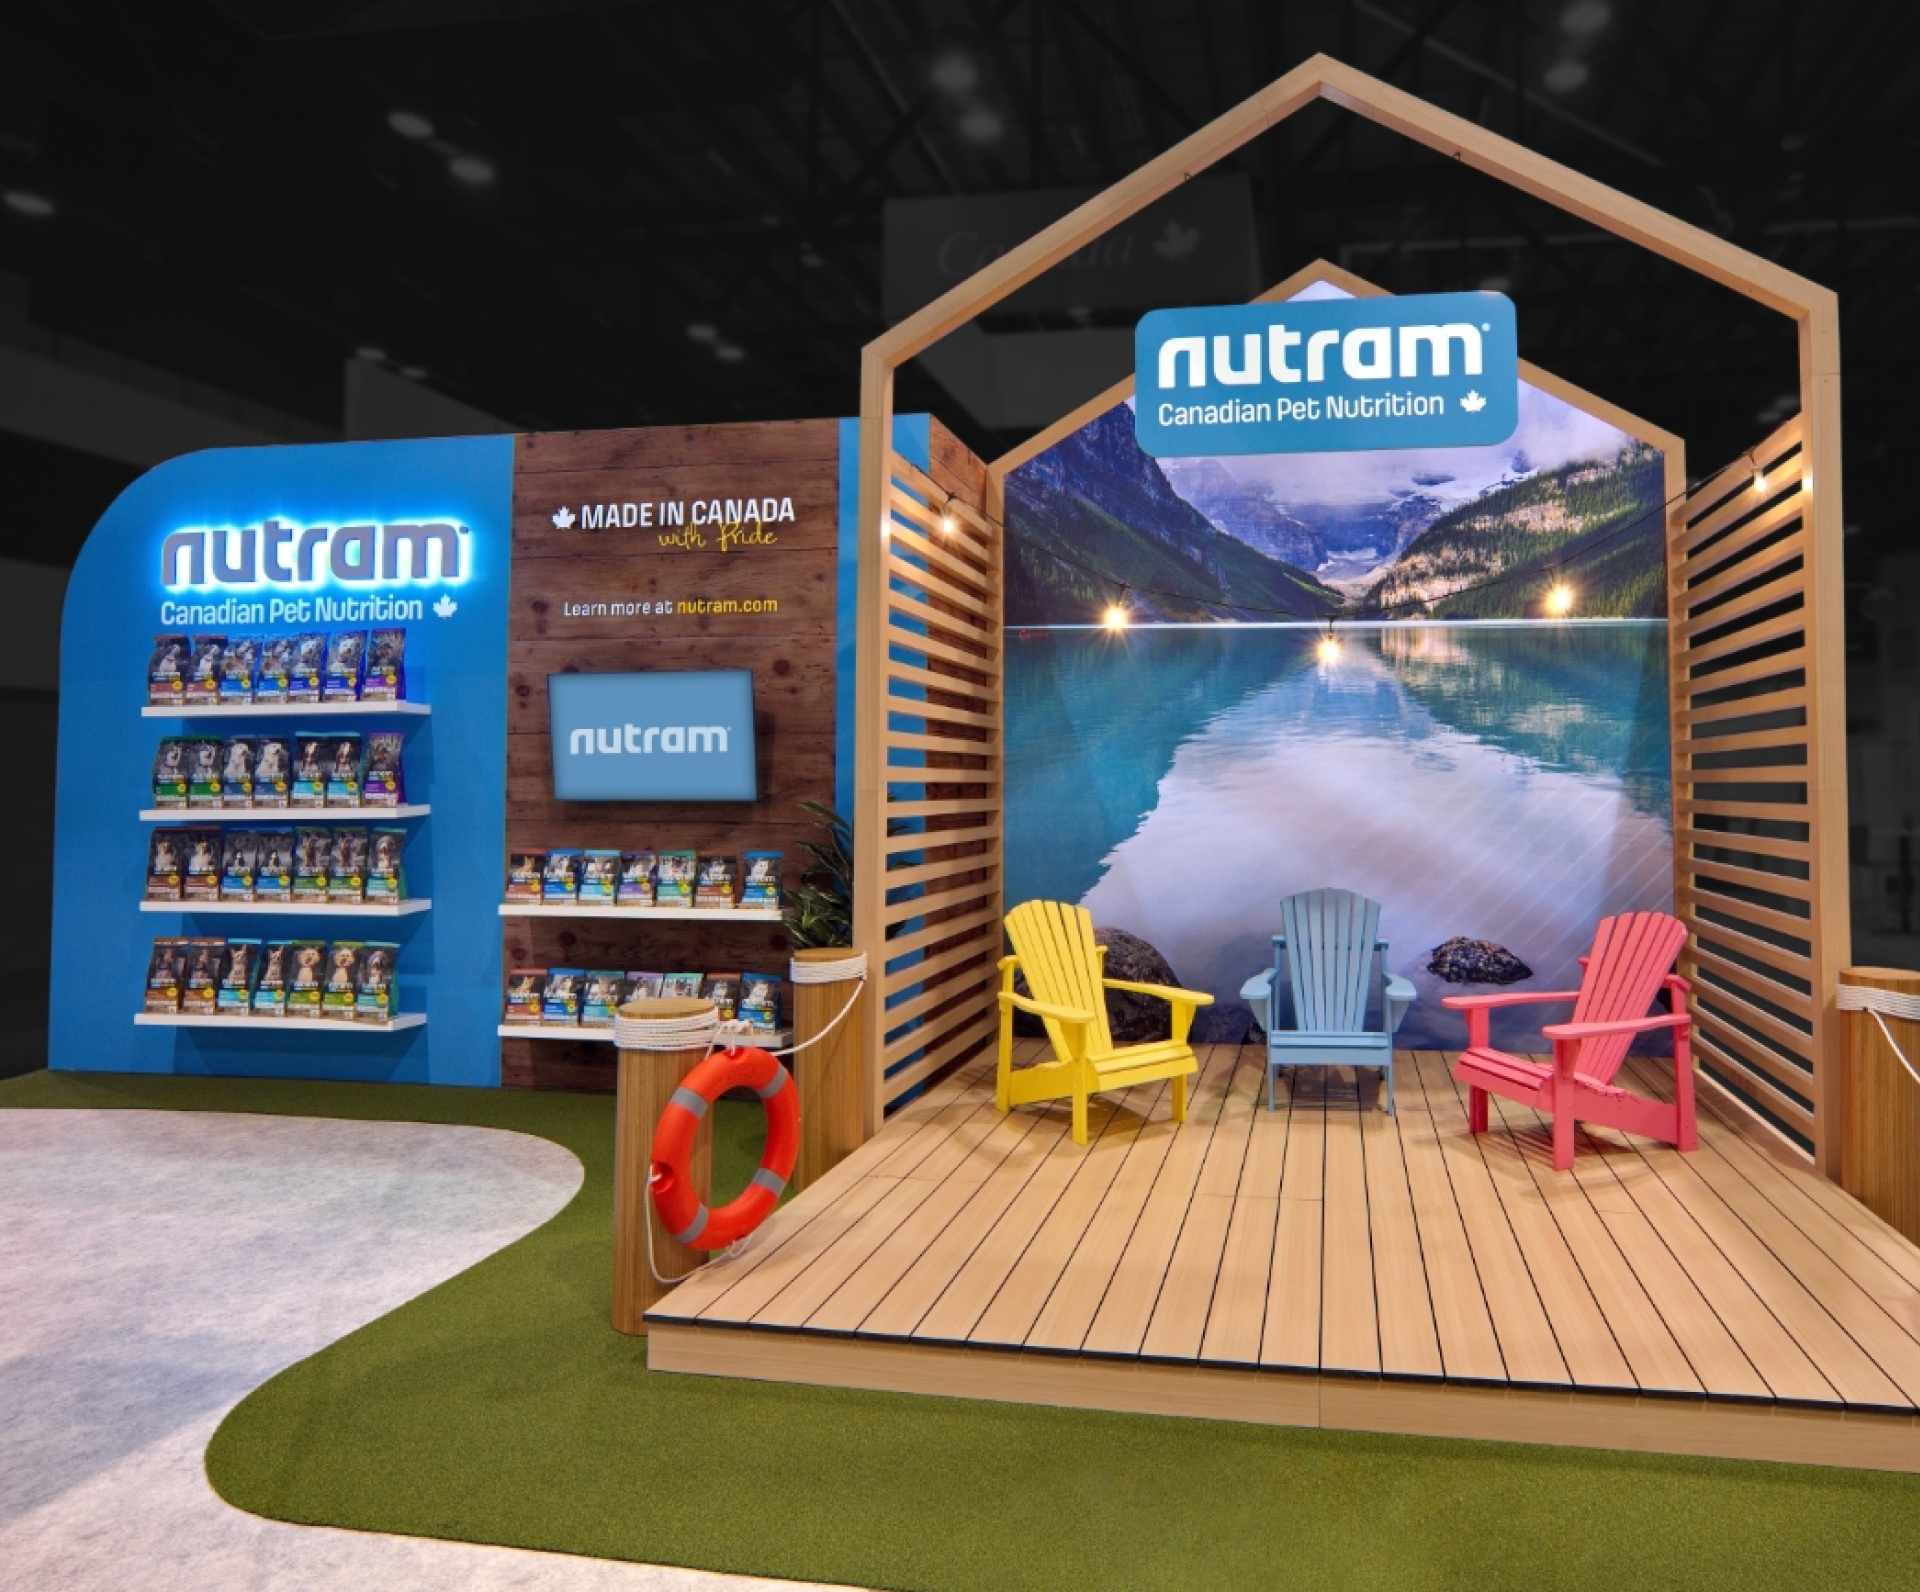 Nutram tradeshow marketing booth display